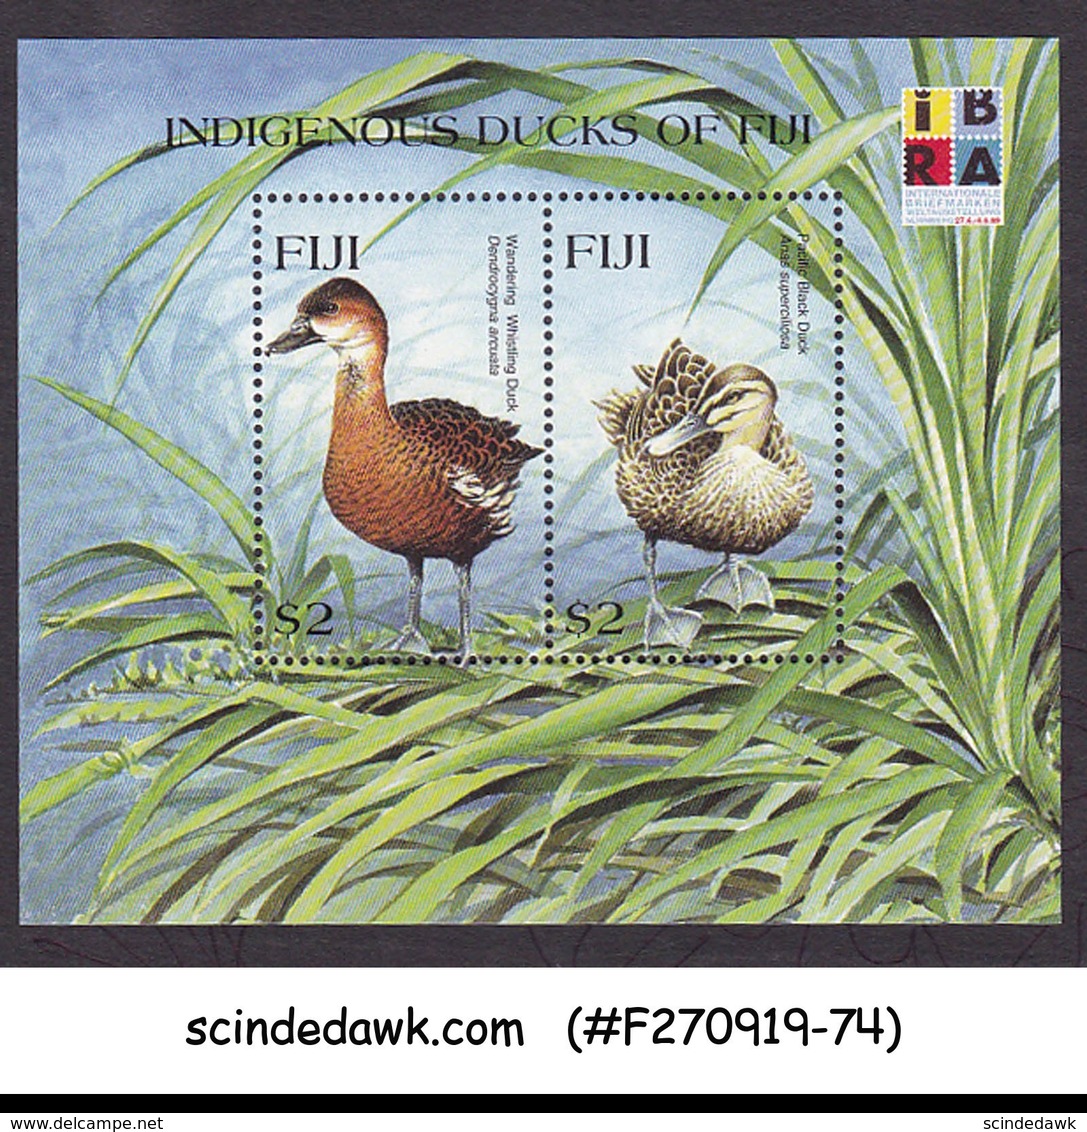 FIJI - 1999 INDIGENOUS DUCKS OF FIJI / BIRDS / IBRA - MIN/SHT MNH - Fiji (1970-...)